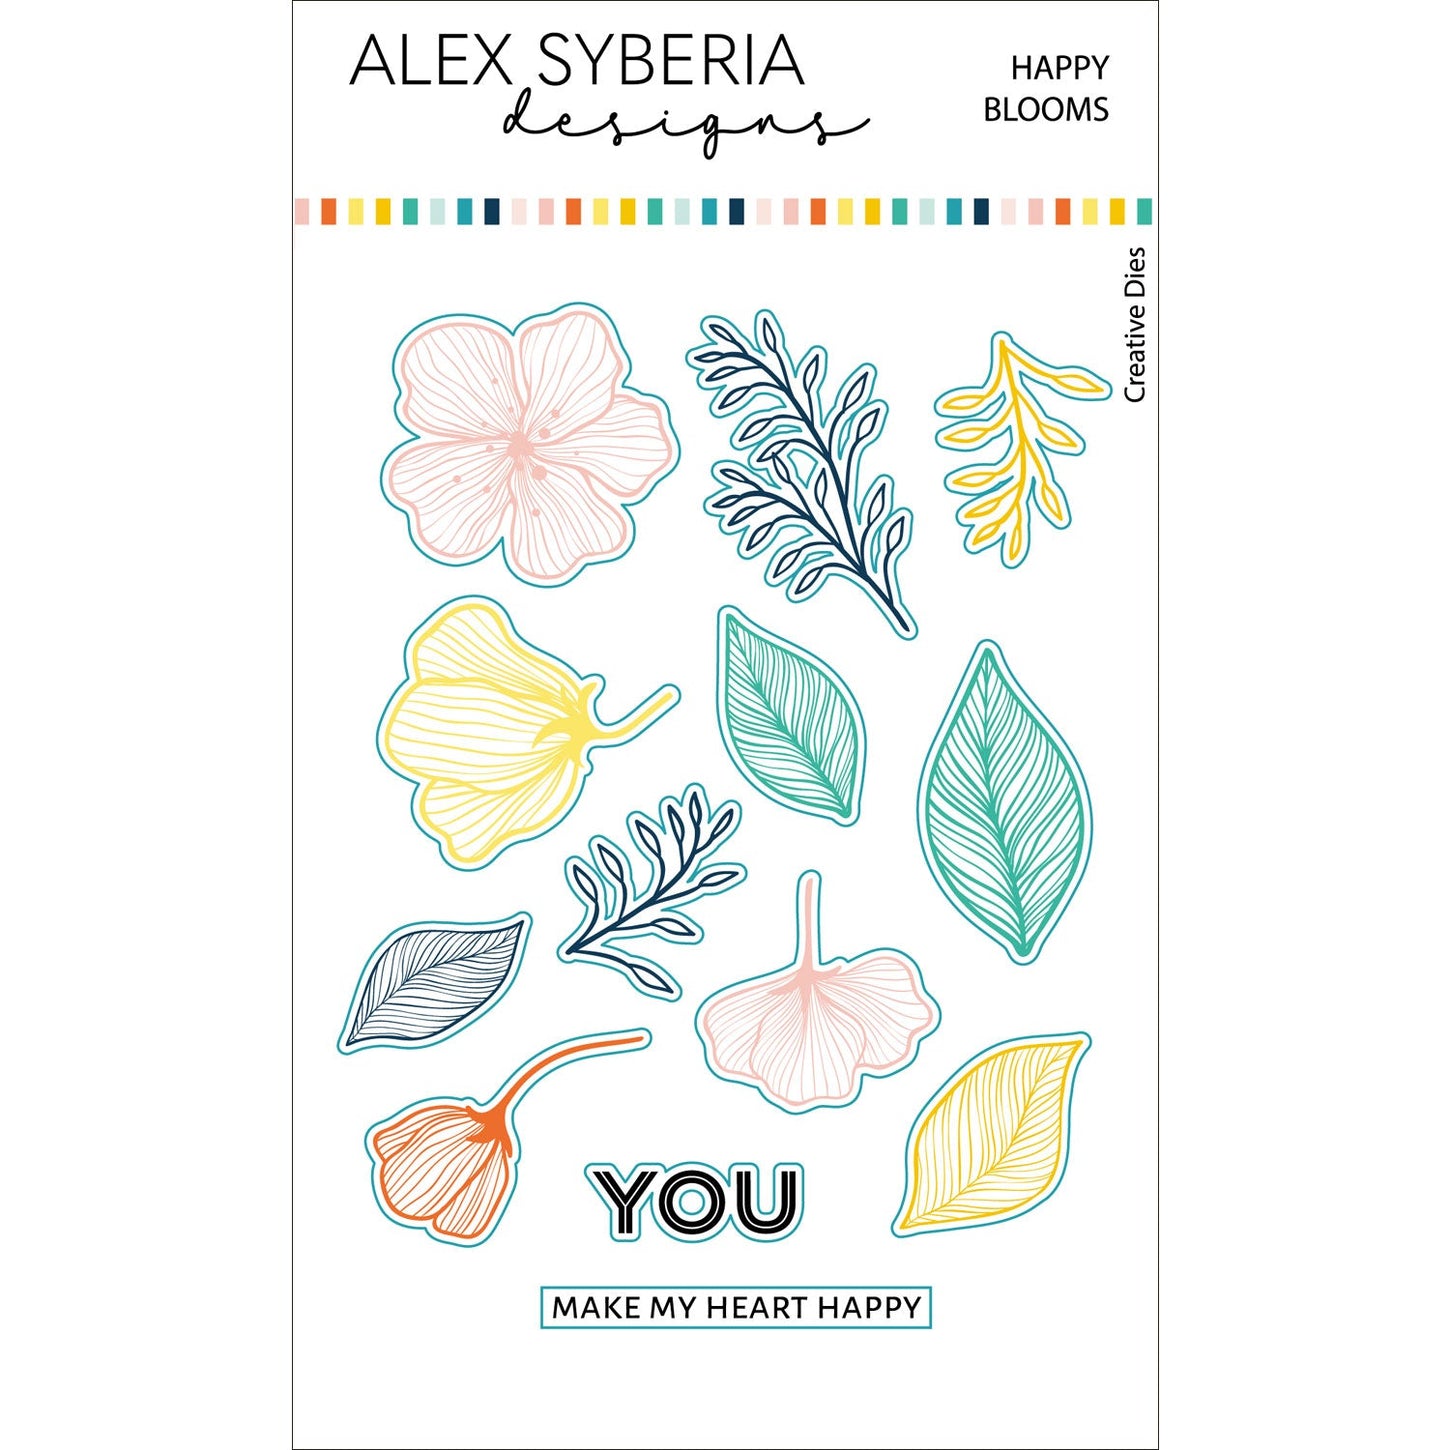 happy-blooms-stamp-alex-syberia-designs-cardmaking-scrapbooking-flowers-handmadecards-dies-stencils-sss-brand